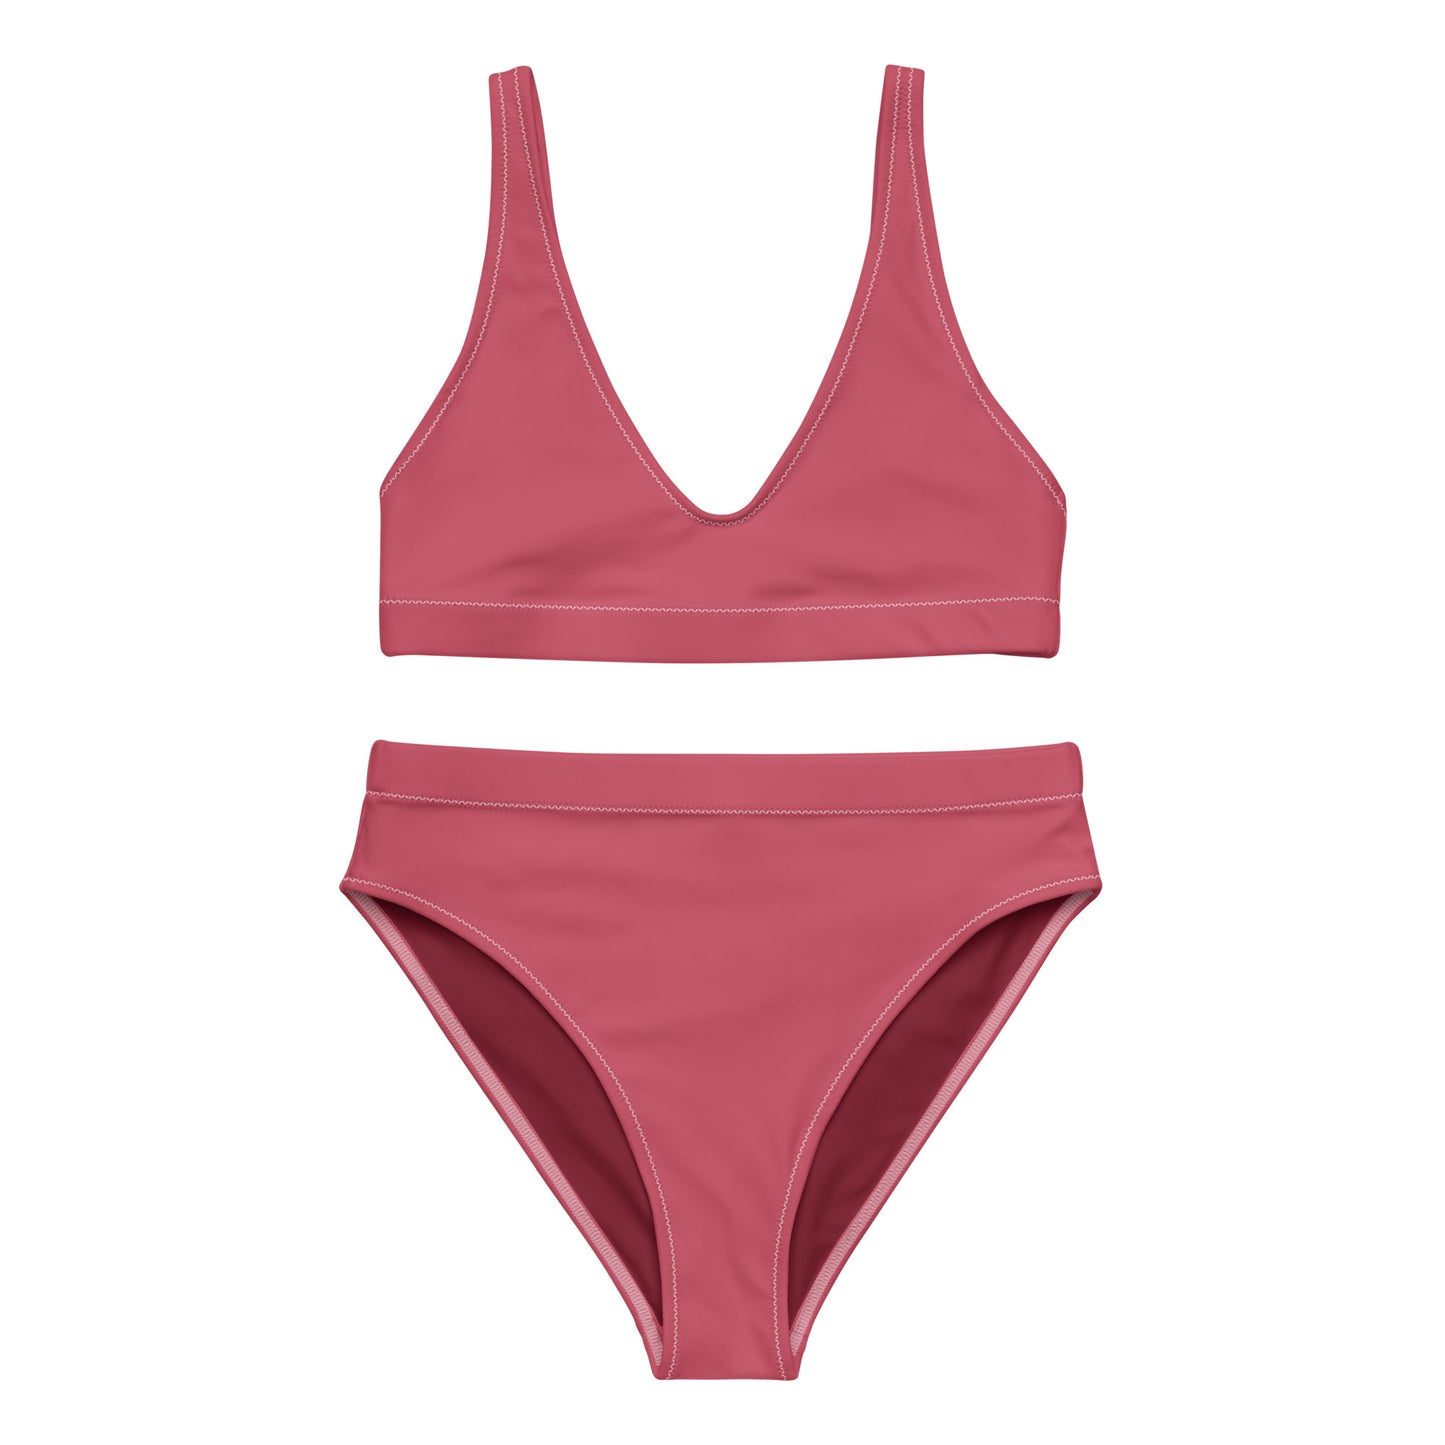 Ensemble de bikini de sport recyclé rose rose rouge, bikini de gym de mode durable